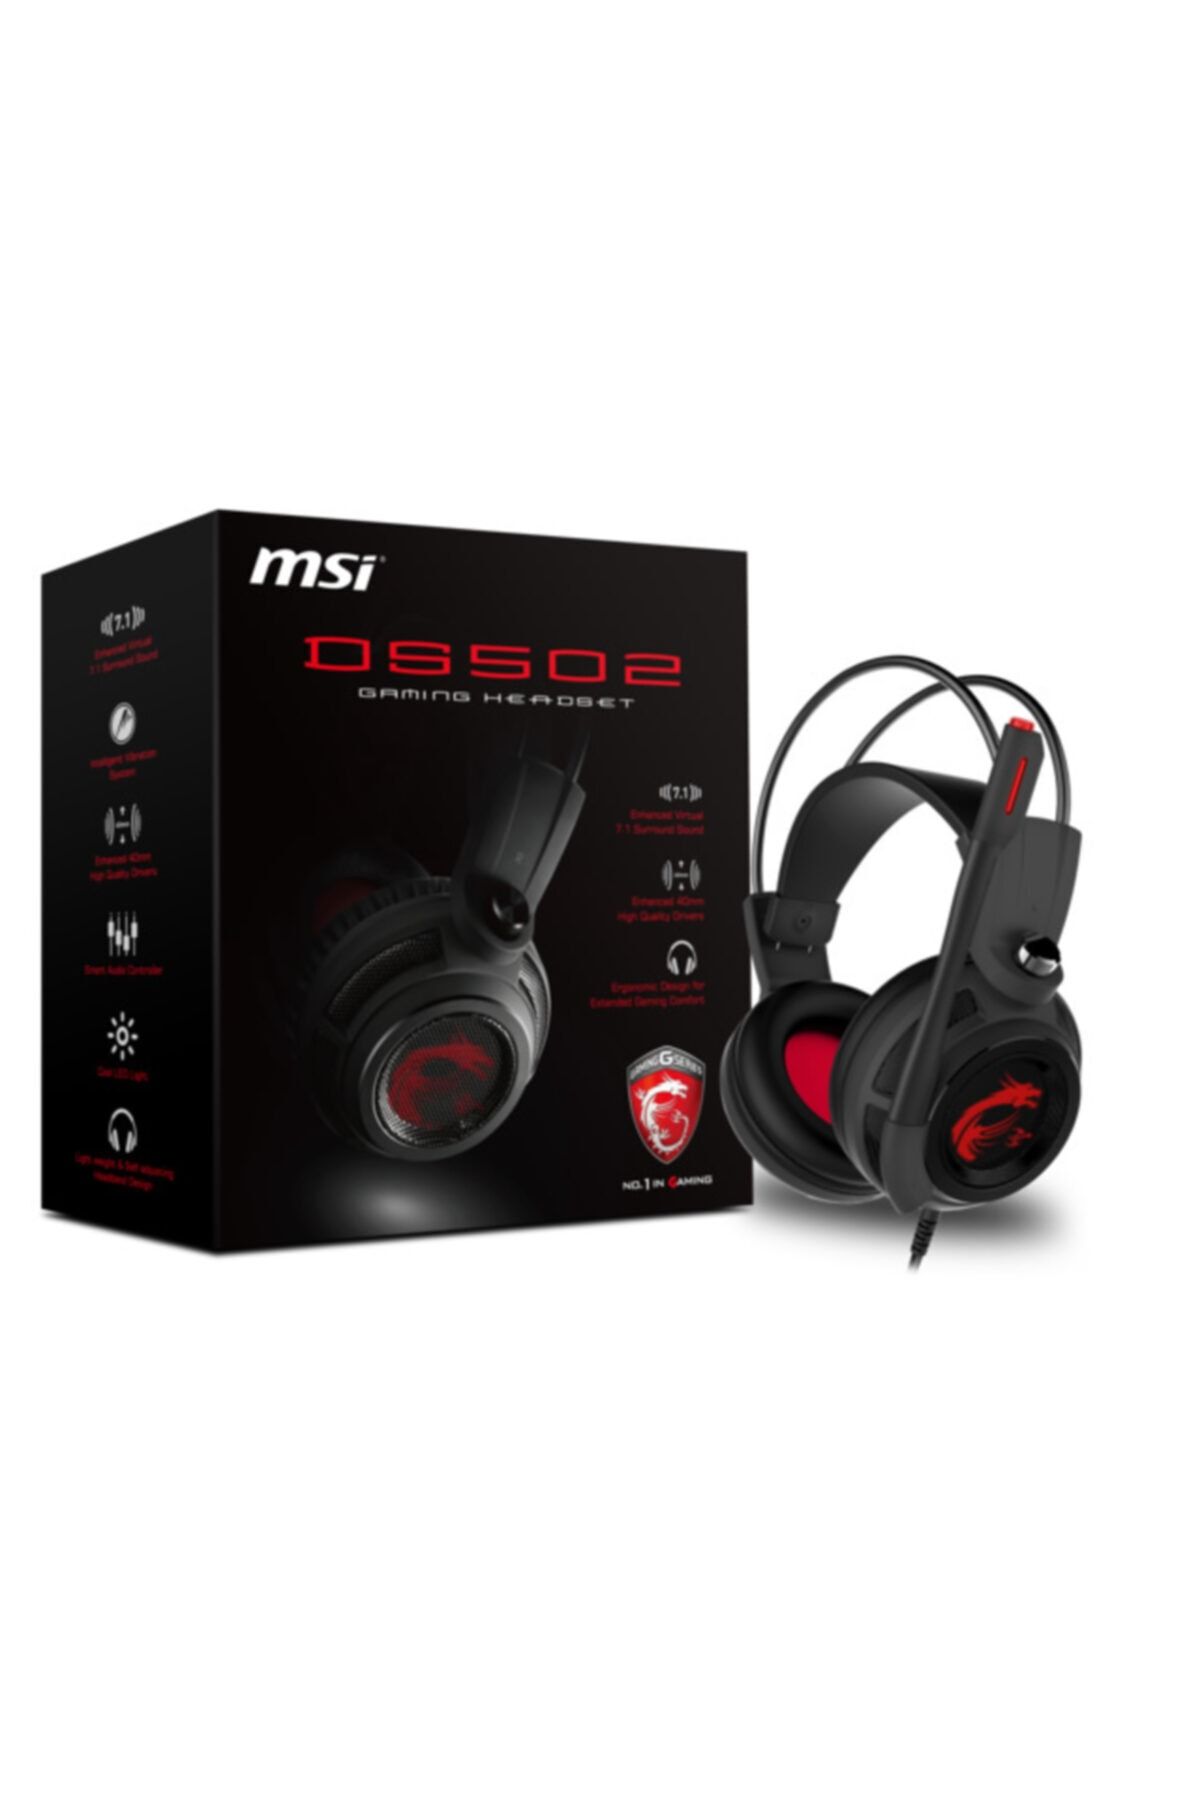 MSI Gg Ds502 Gamıng Headset 7.1 Cevresel Ses 2x40mm Surucu Kırmızı Dragon Led Aydınlatma